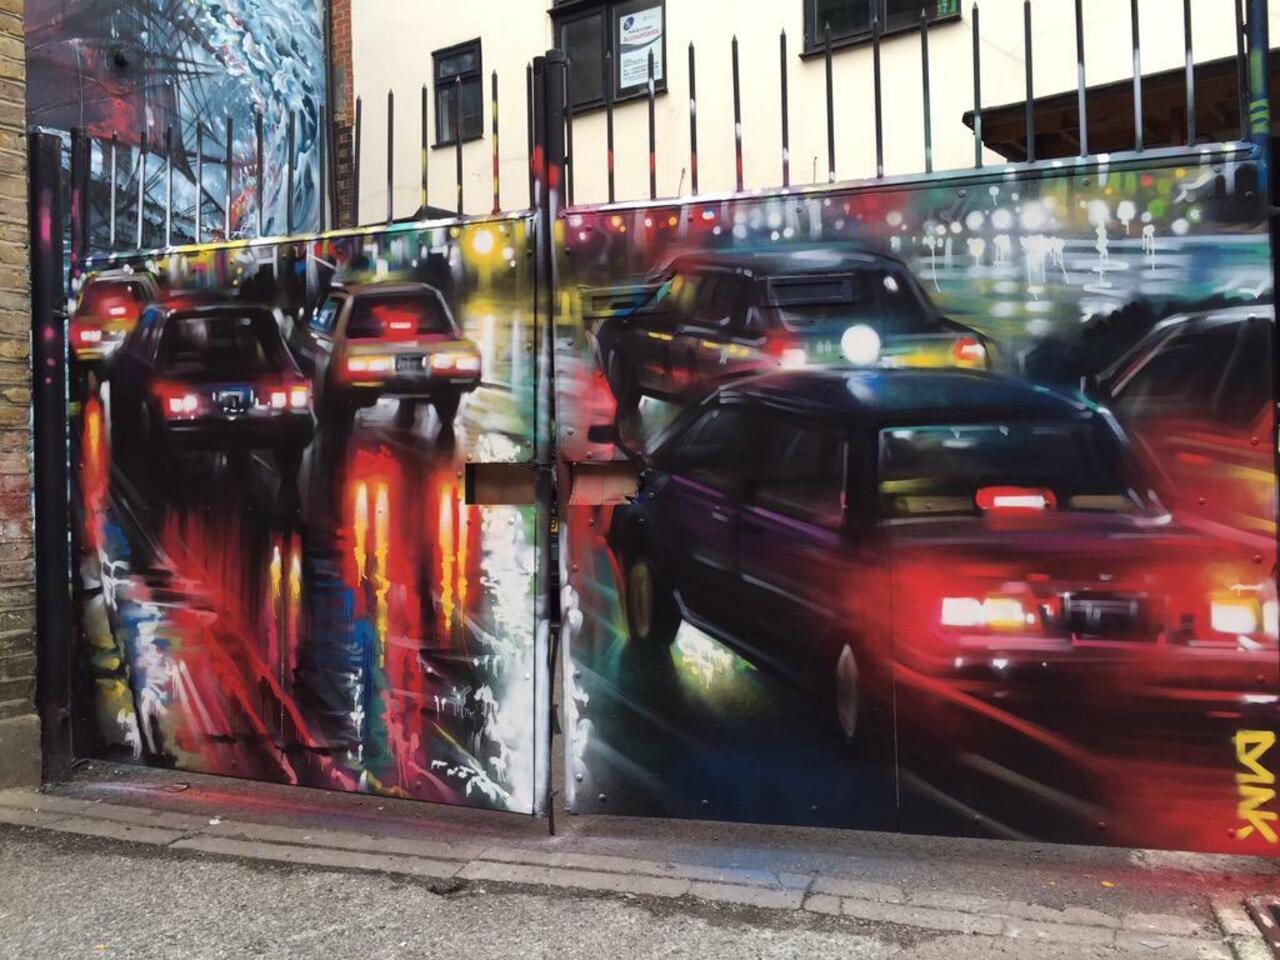 New Street Art by DanKitchener in Brick Lane London 

#art #graffiti #mural #streetart http://t.co/uobhdwjDKd